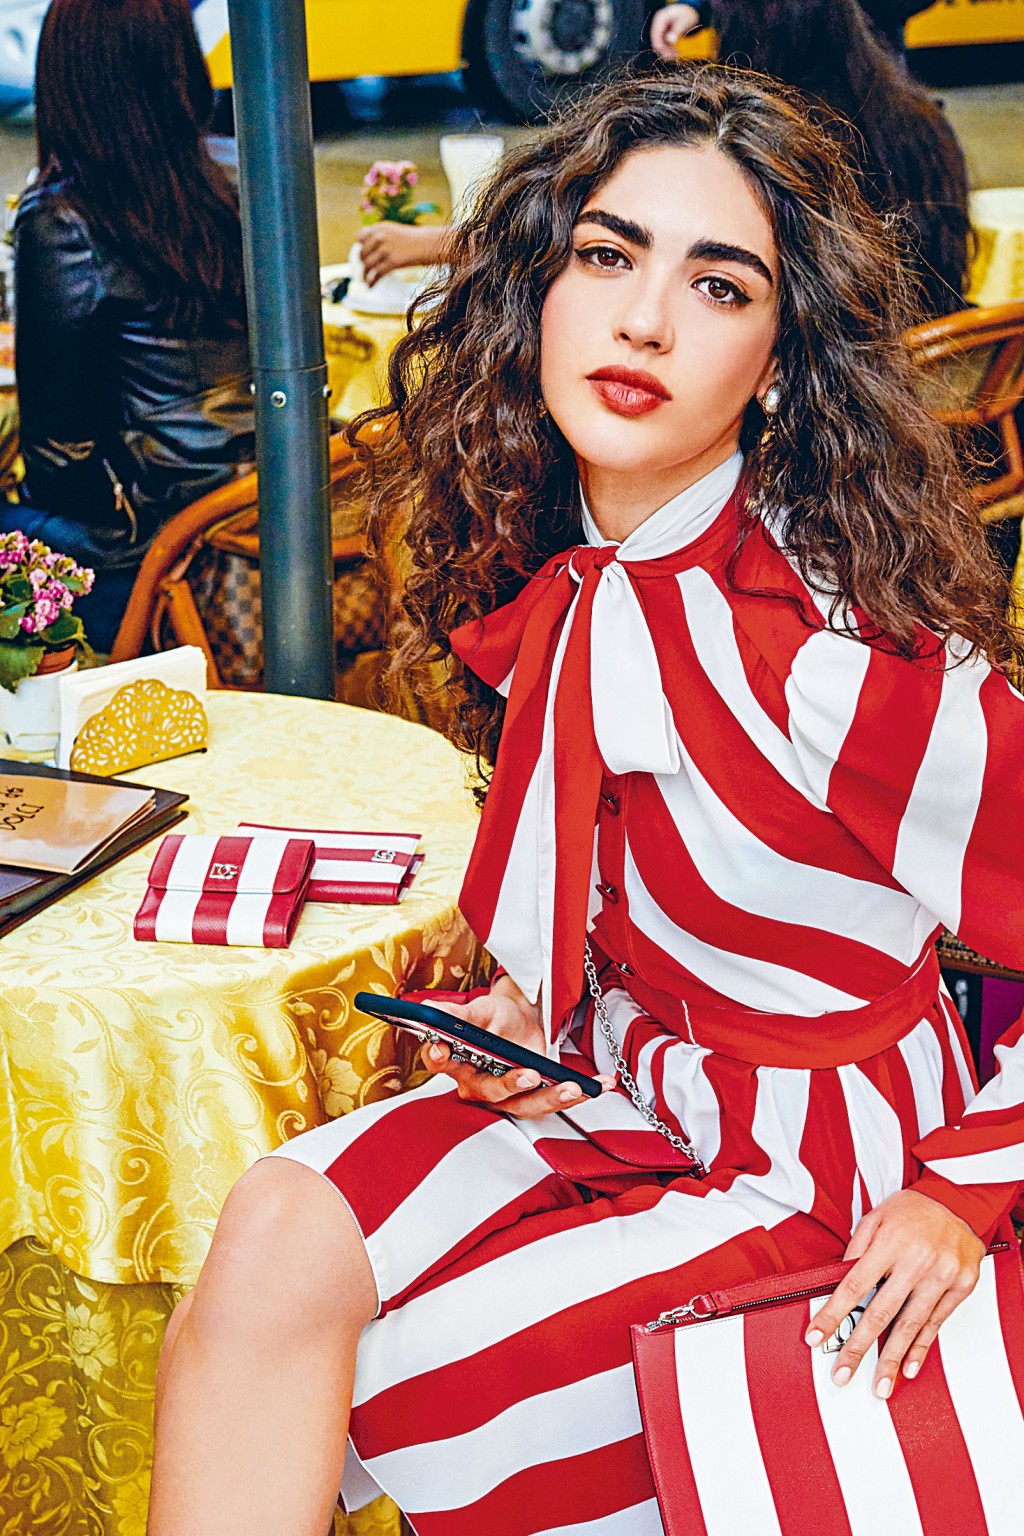 Dolce&Gabbana度假系列紅白色條紋連身裙，襯以同色條紋小皮具及手袋，演繹Pattern-on-pattern的時尚美態。